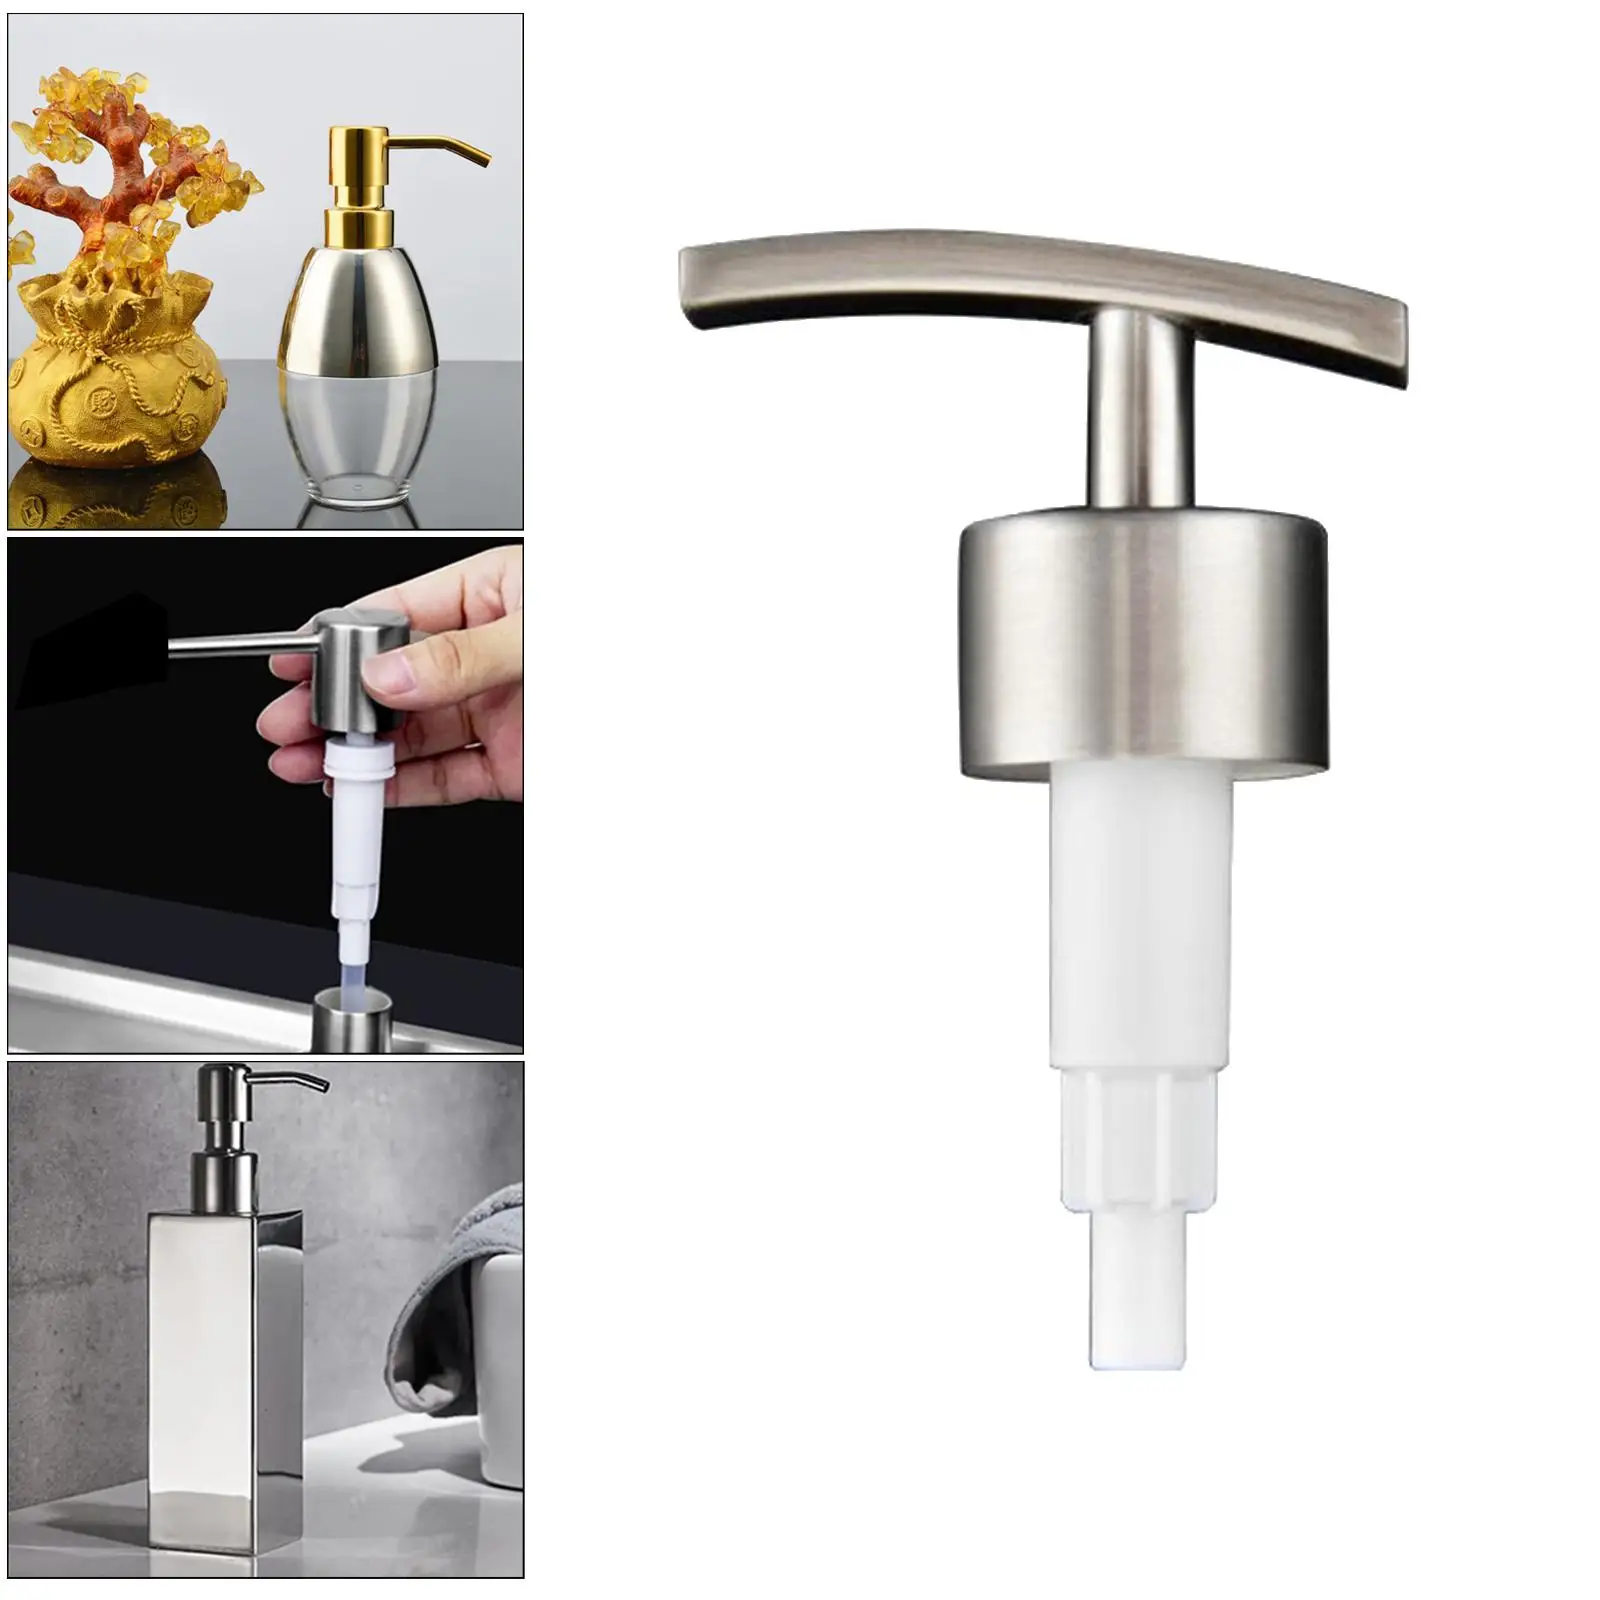 Dispenser Pump Stainless Steel Liquid Soap Replacement Pumps Accessories